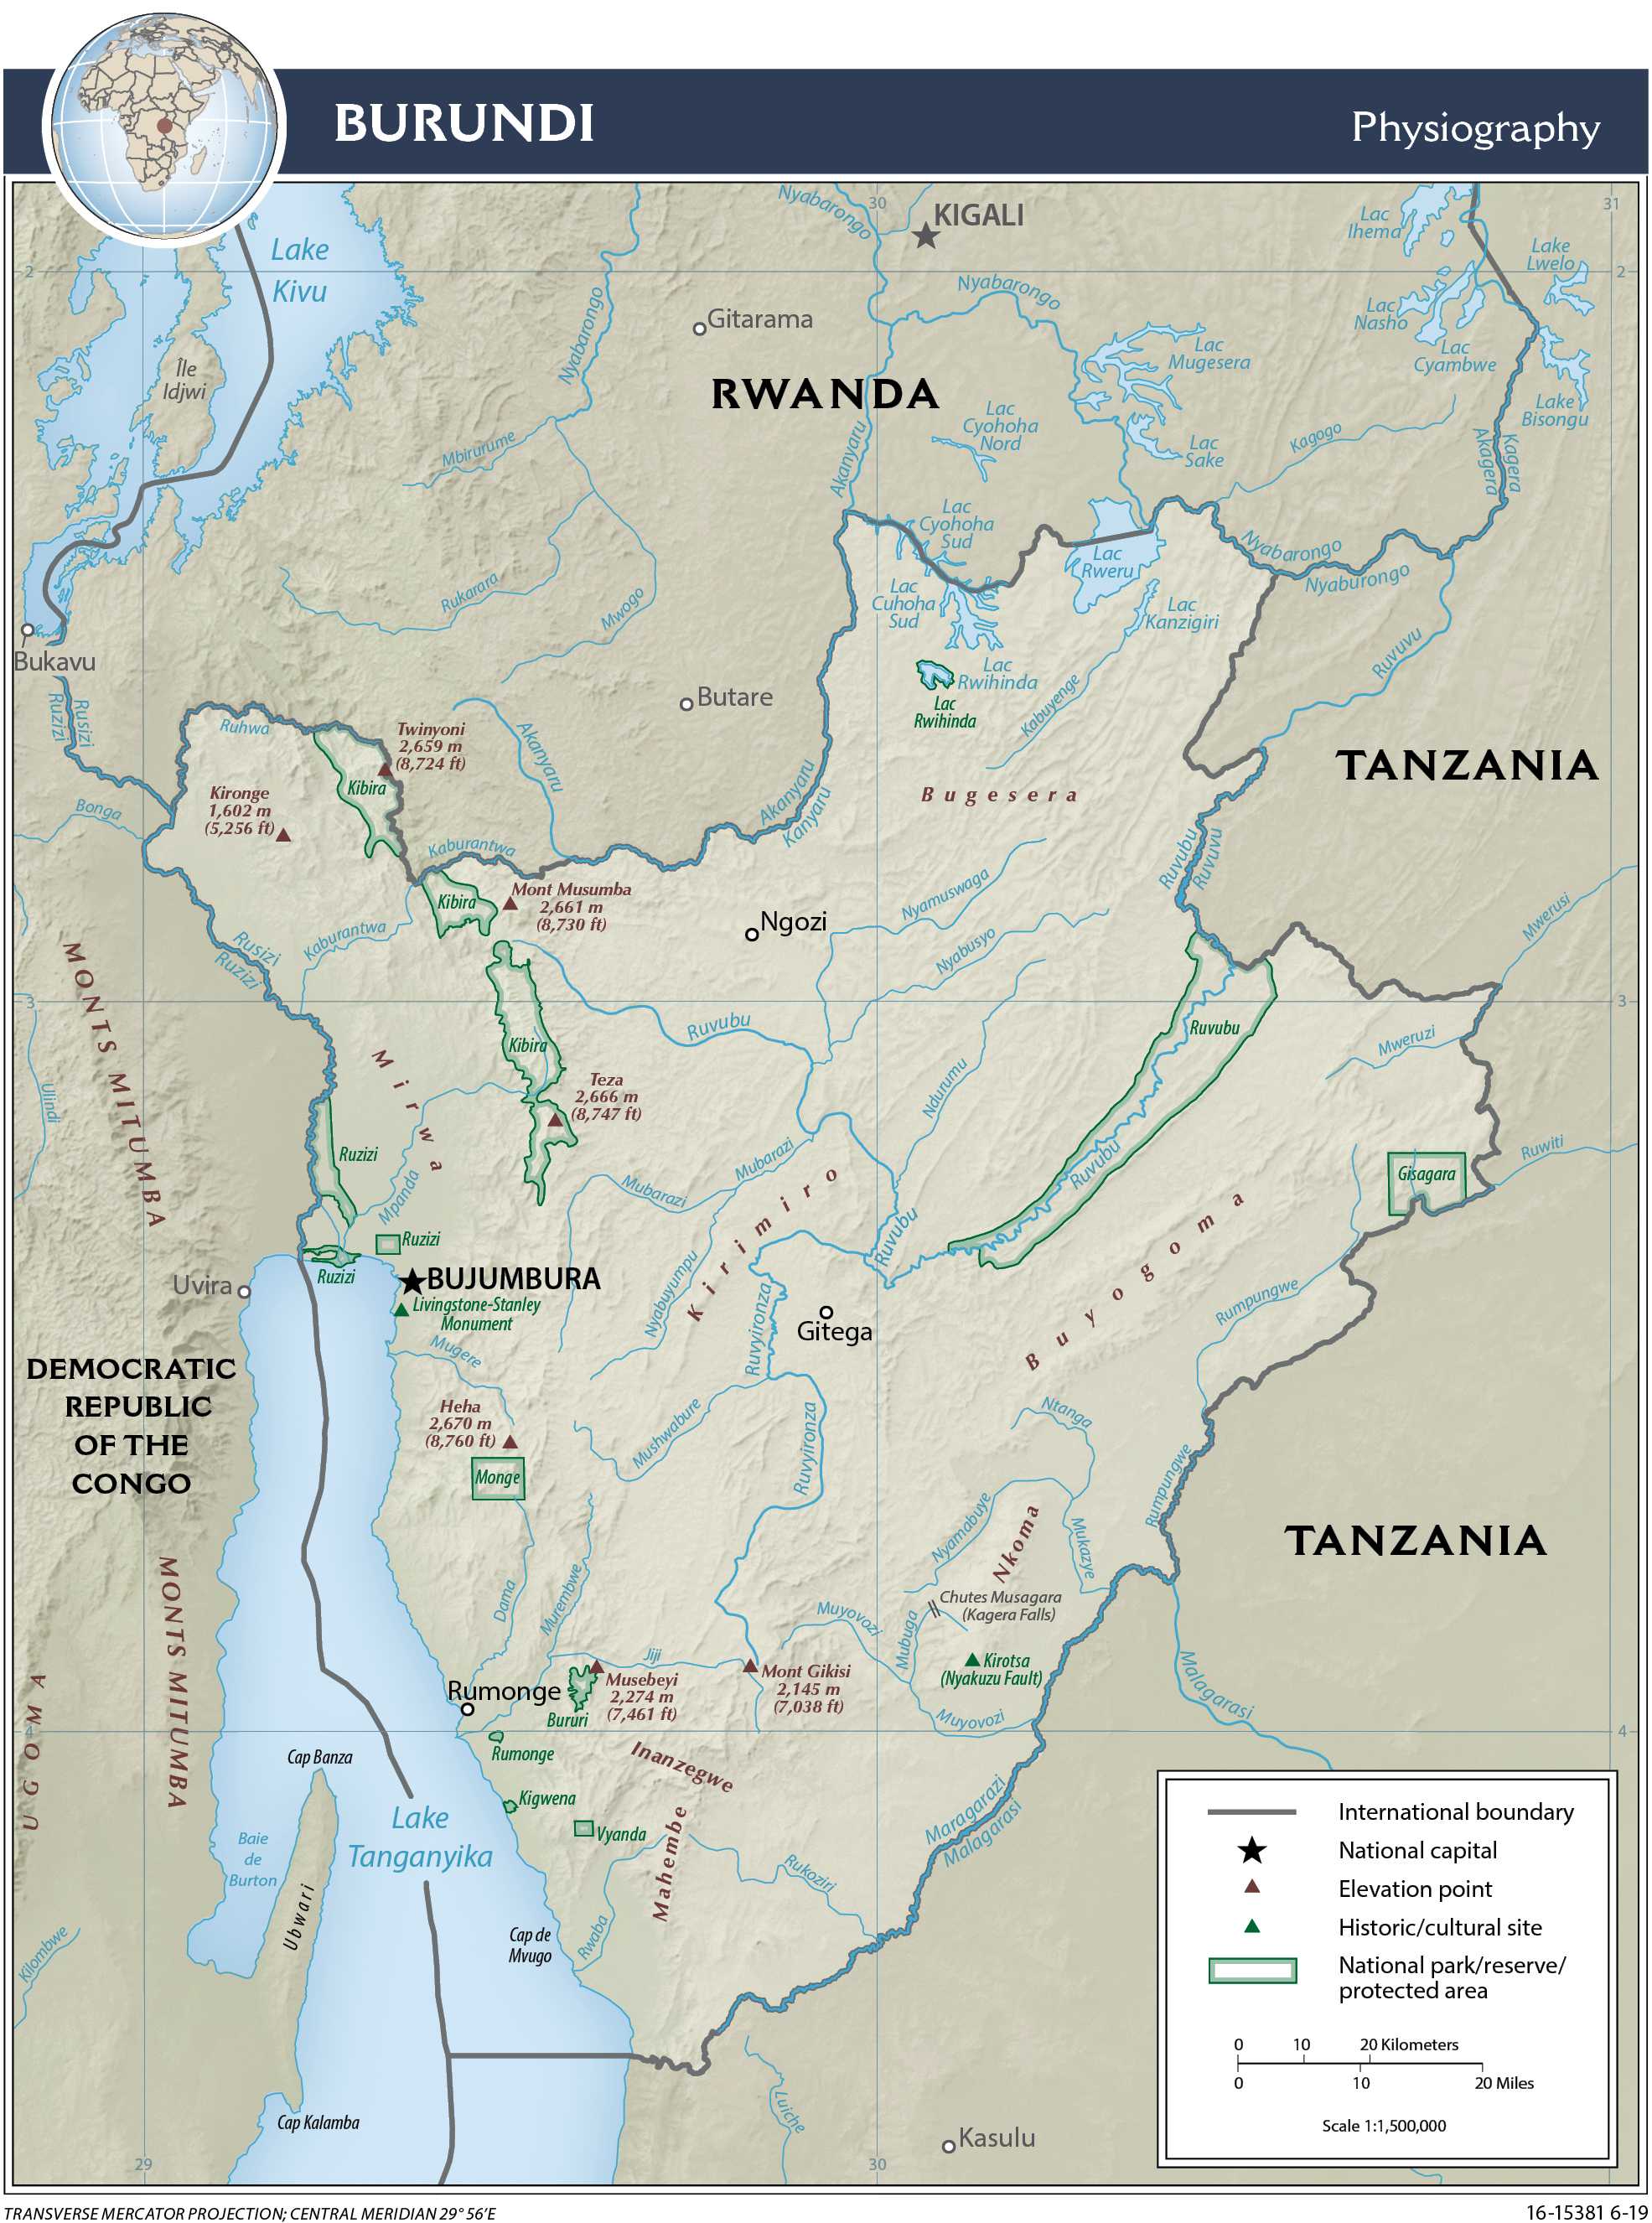 Physiographical map of Burundi.